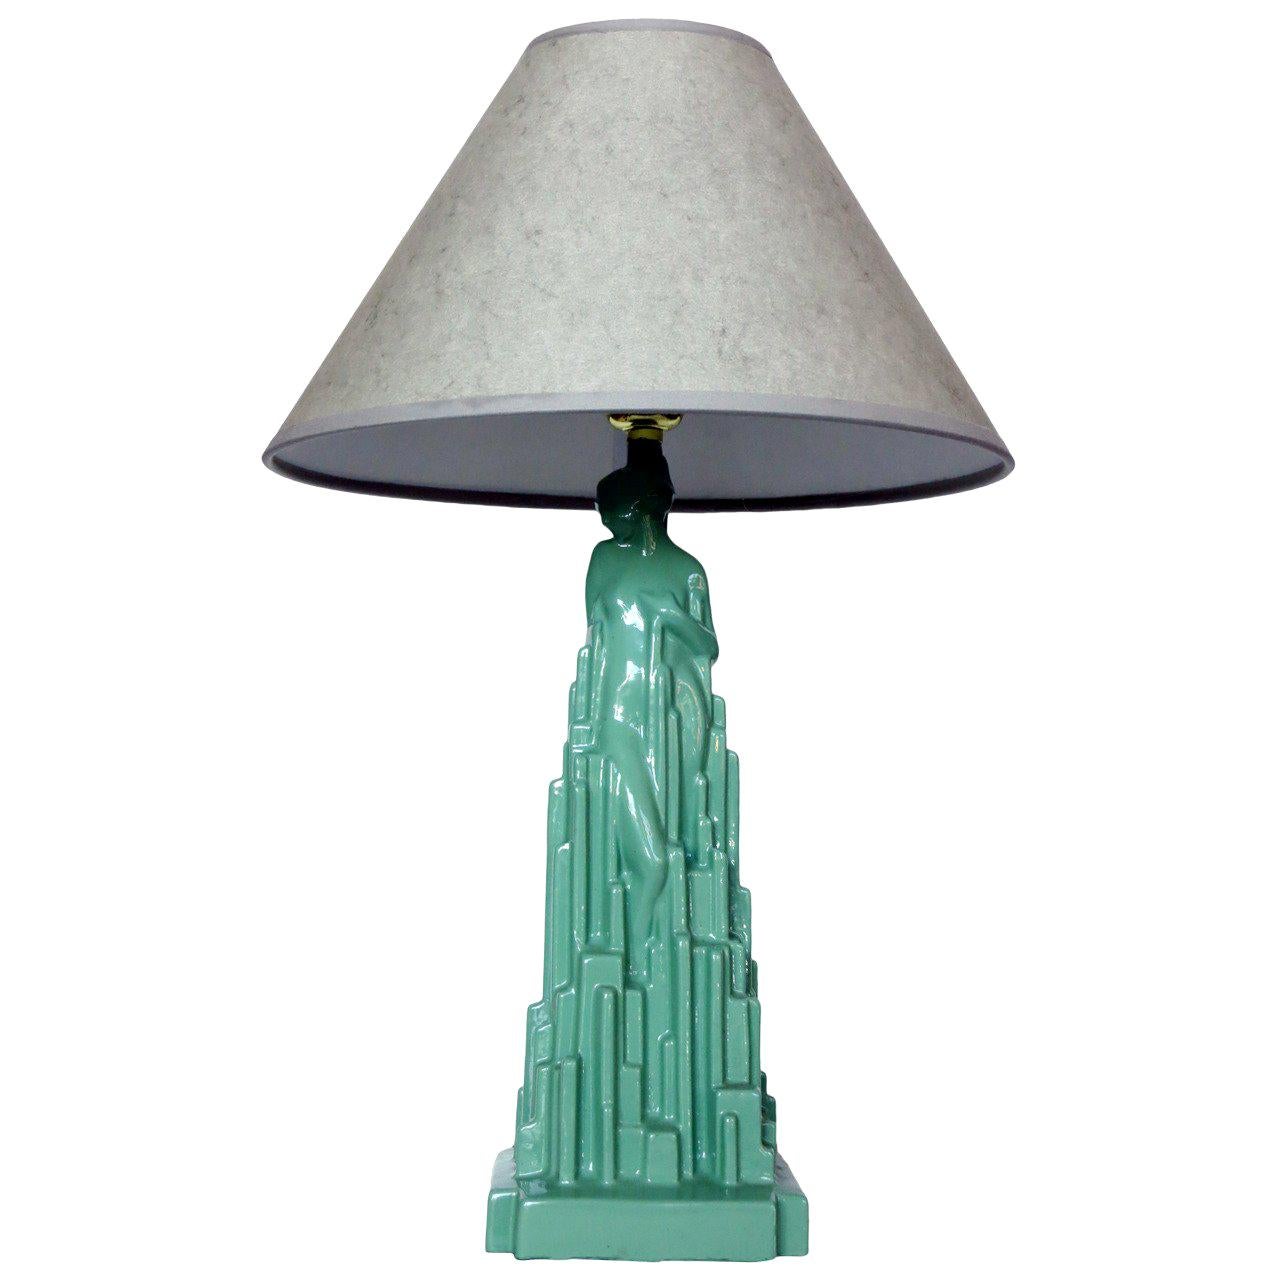 Frankart "Spirit of Modernism" Sculptural Table Lamp